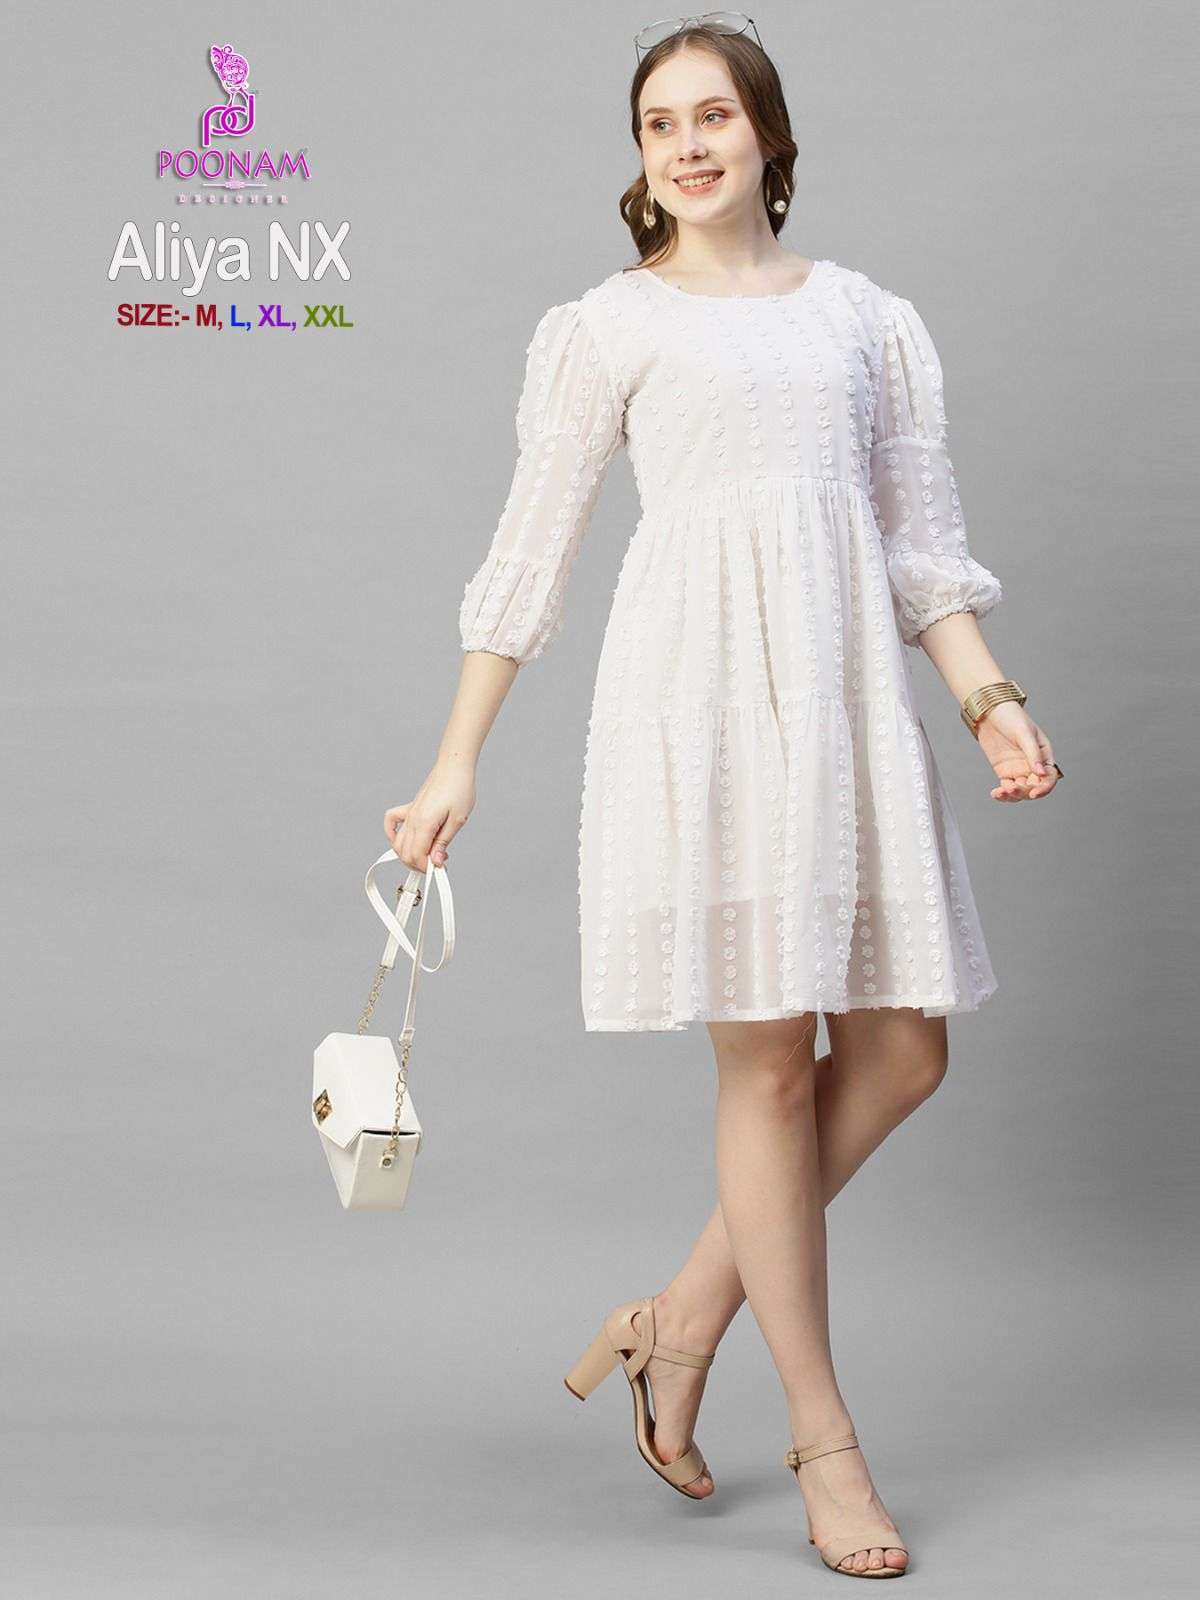 aliya nx 1001-1006 series by poonam designer fancy short gown catalogue wholesaler surat 